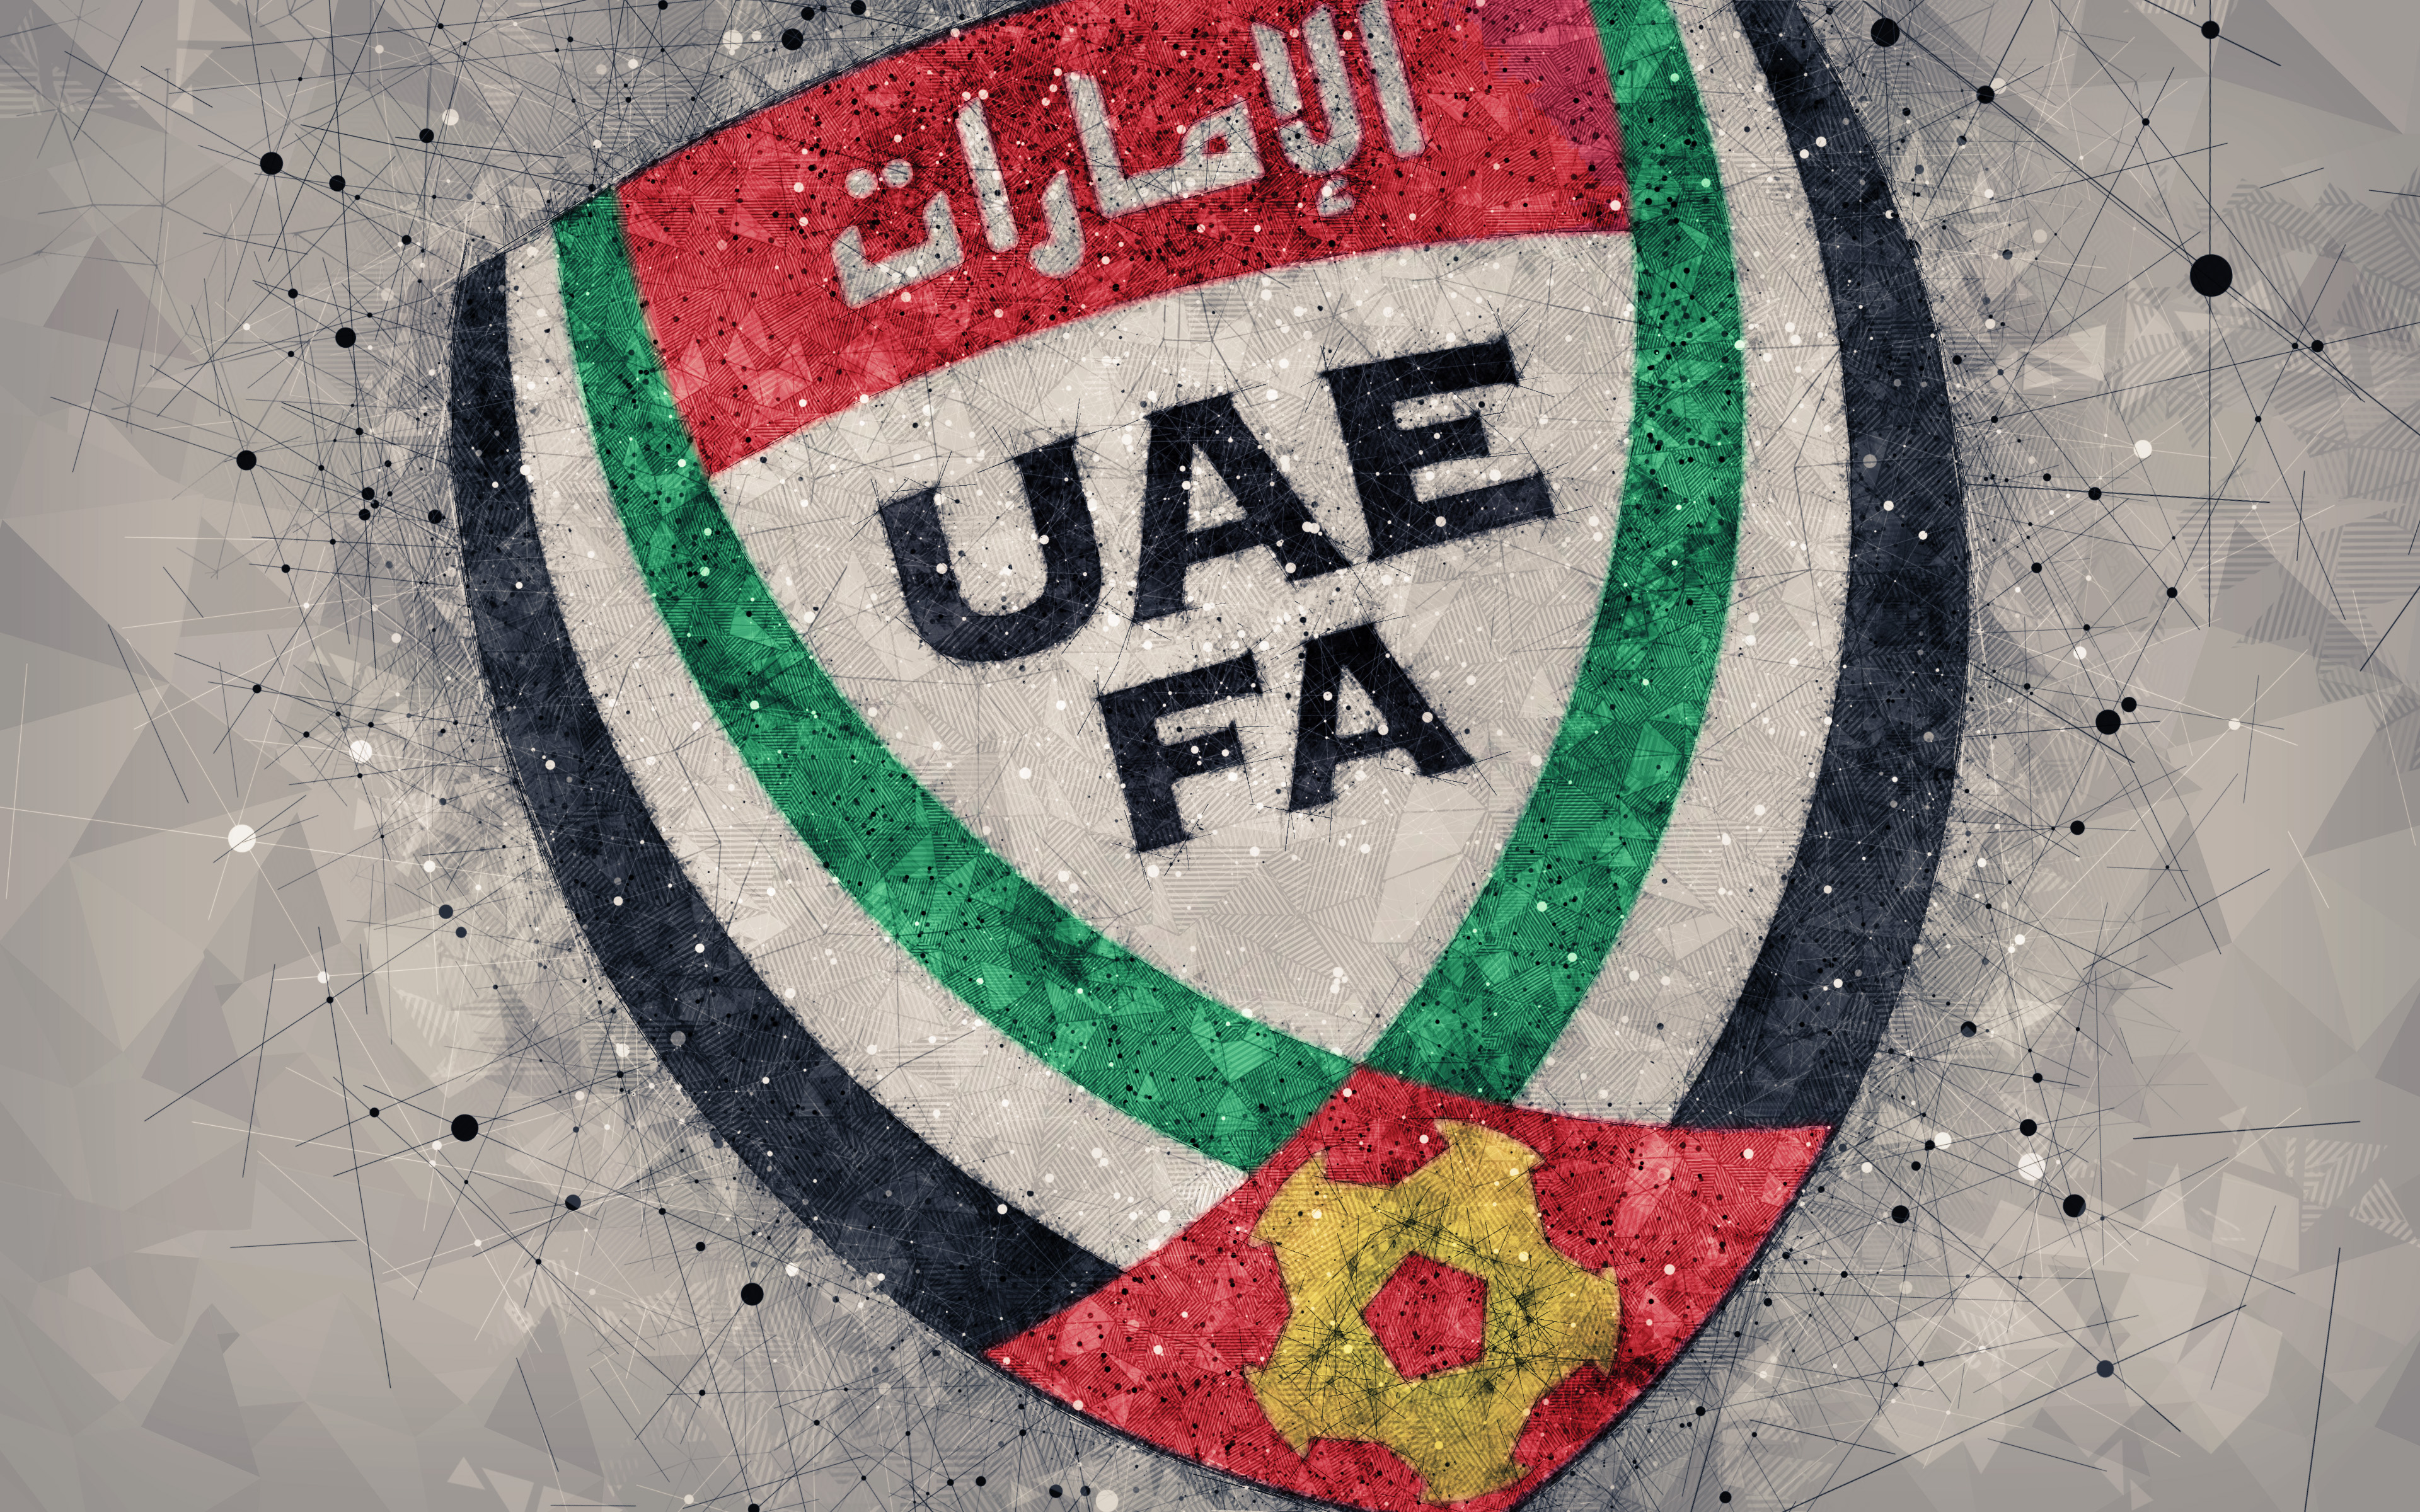 United Arab Emirates National Football Team Wallpapers